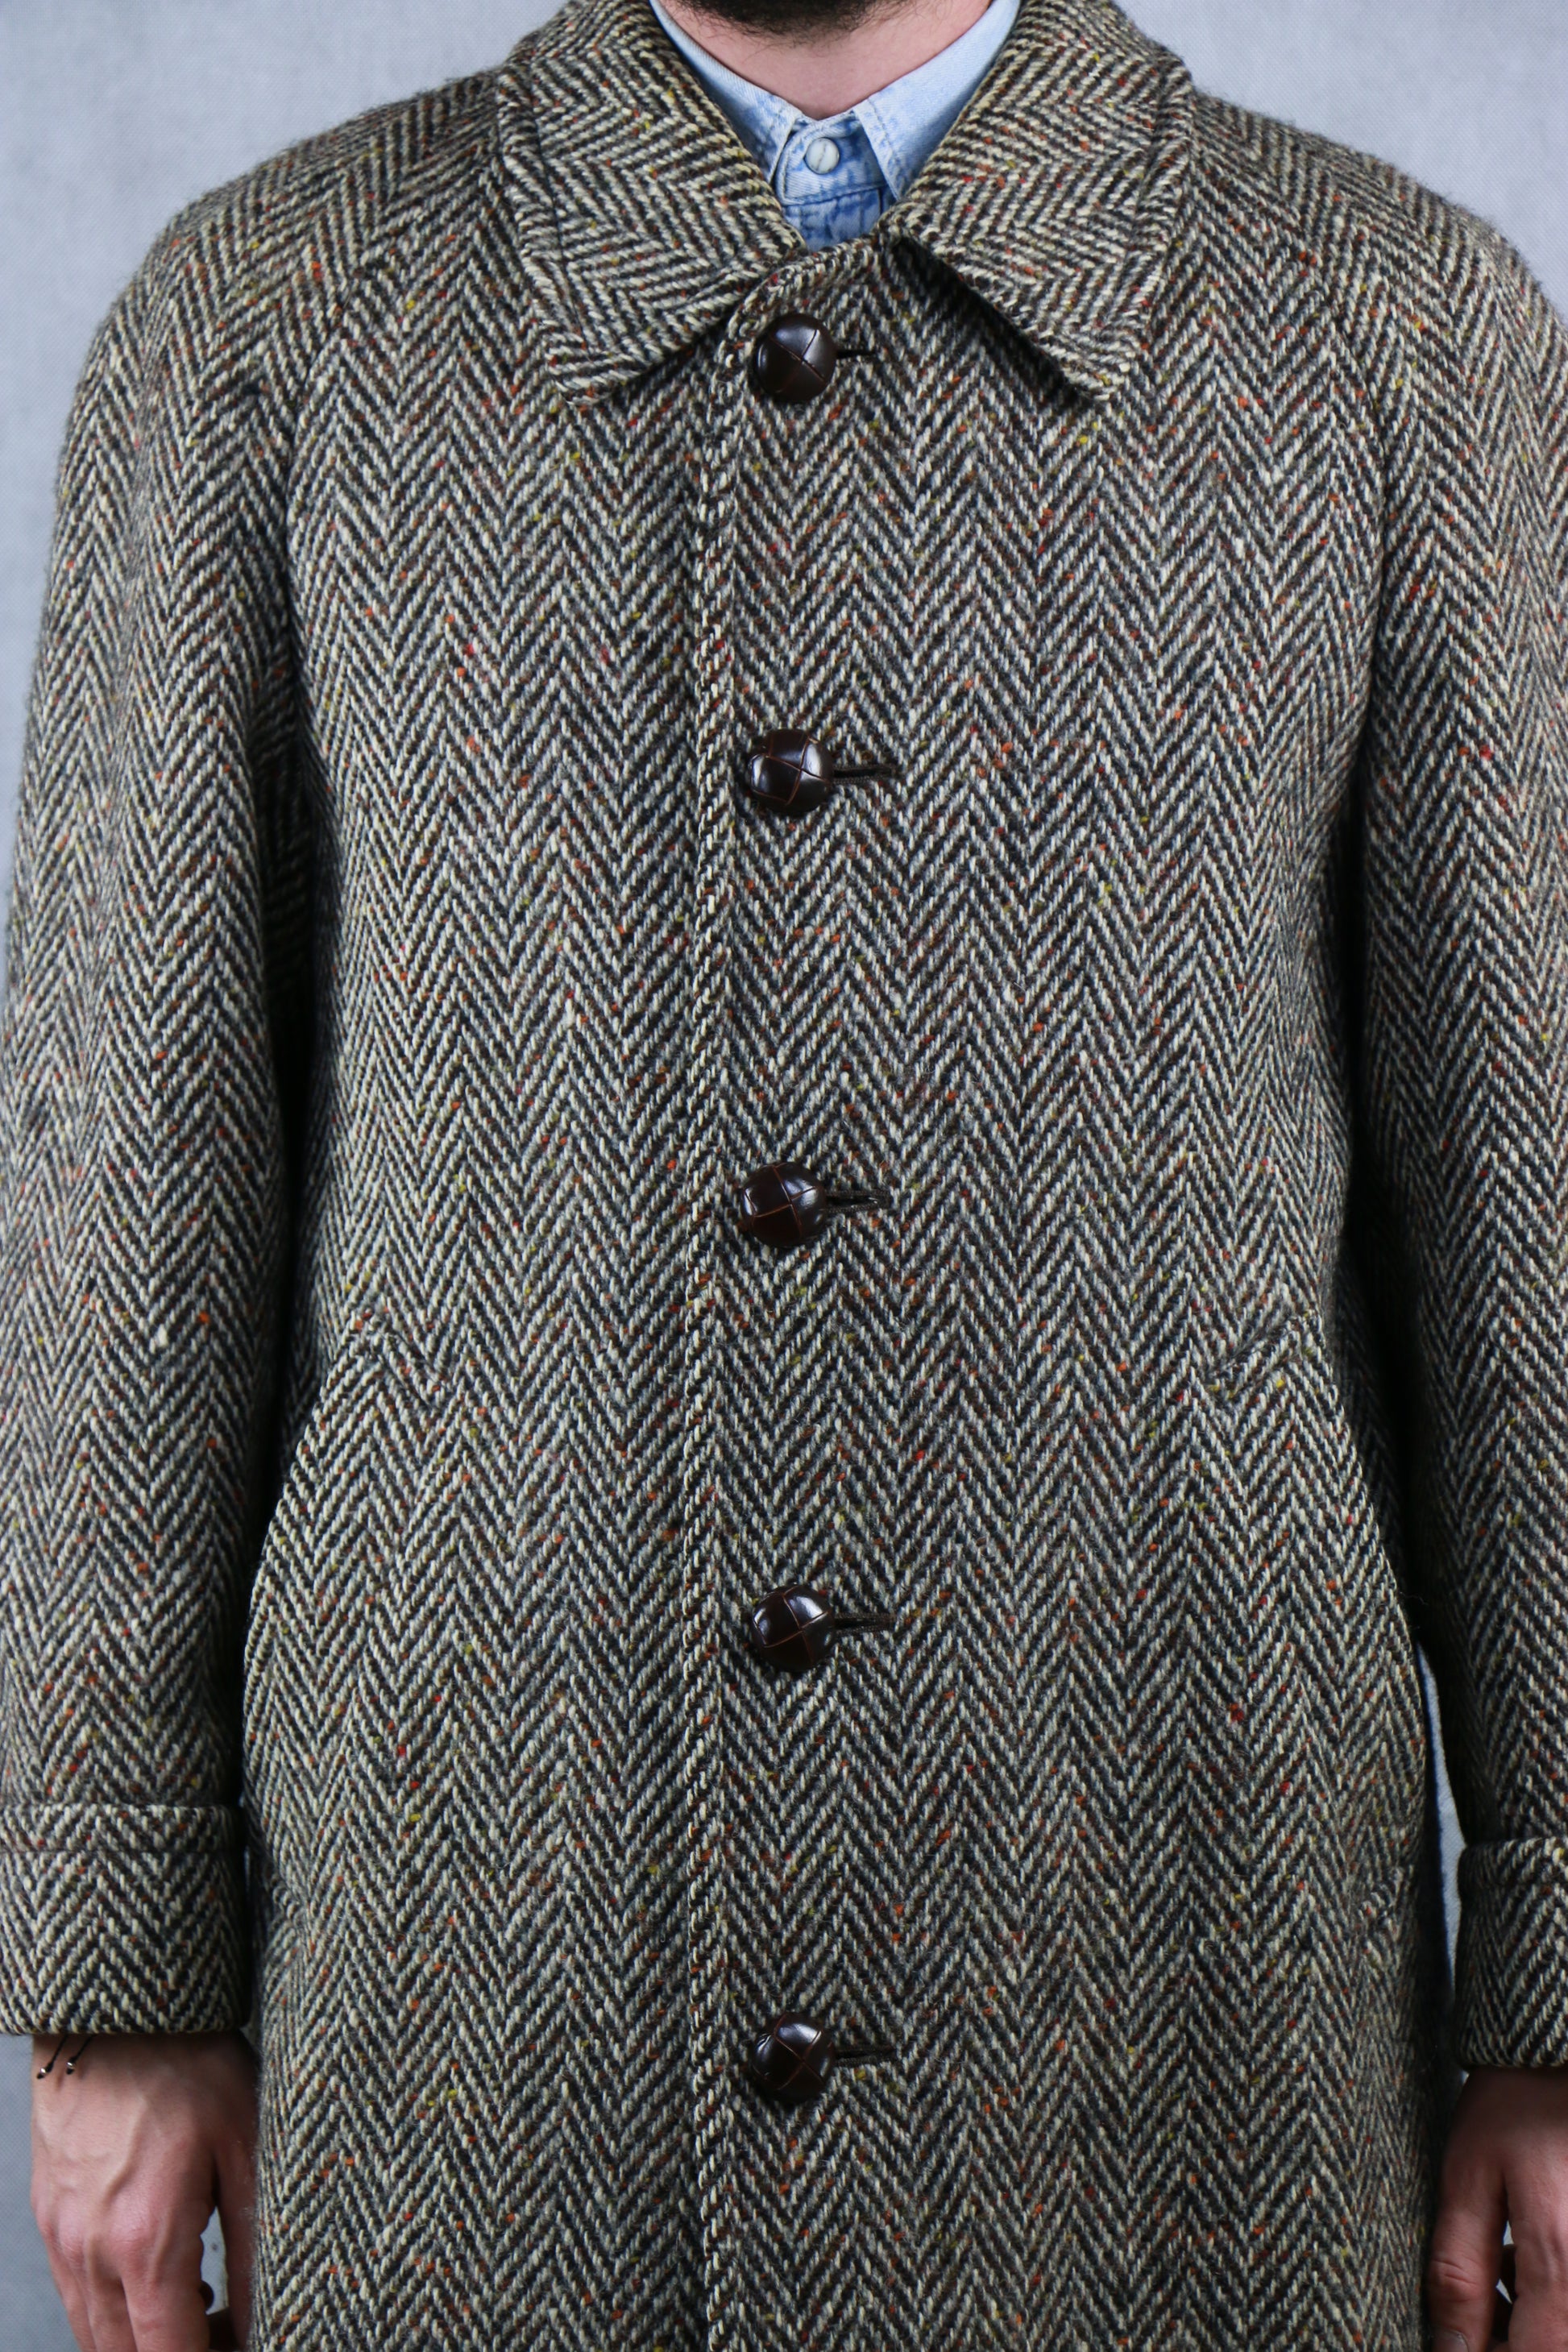 Aquascutum Irish Tweed coat - vintage clothing clochard92.com